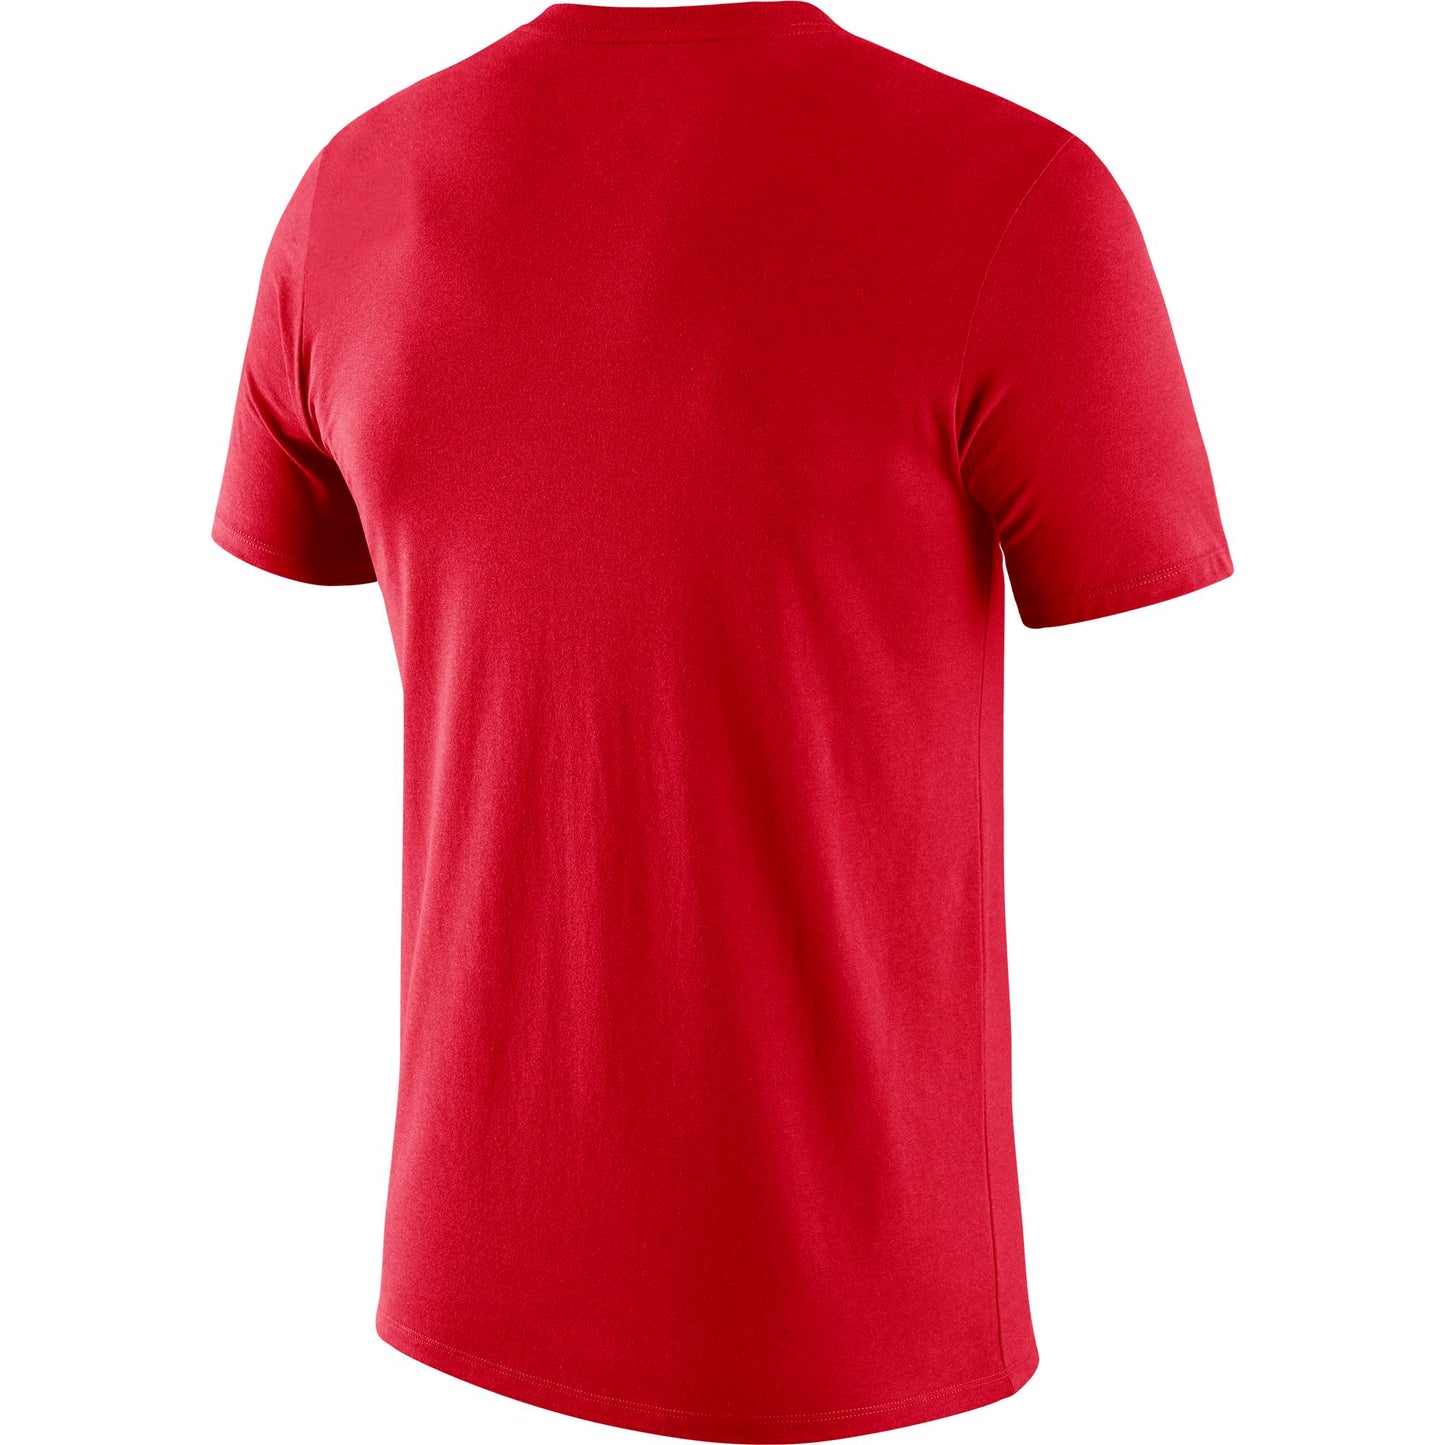 Nike Men's Georgia Bulldogs Essential Logo Red T-Shirt